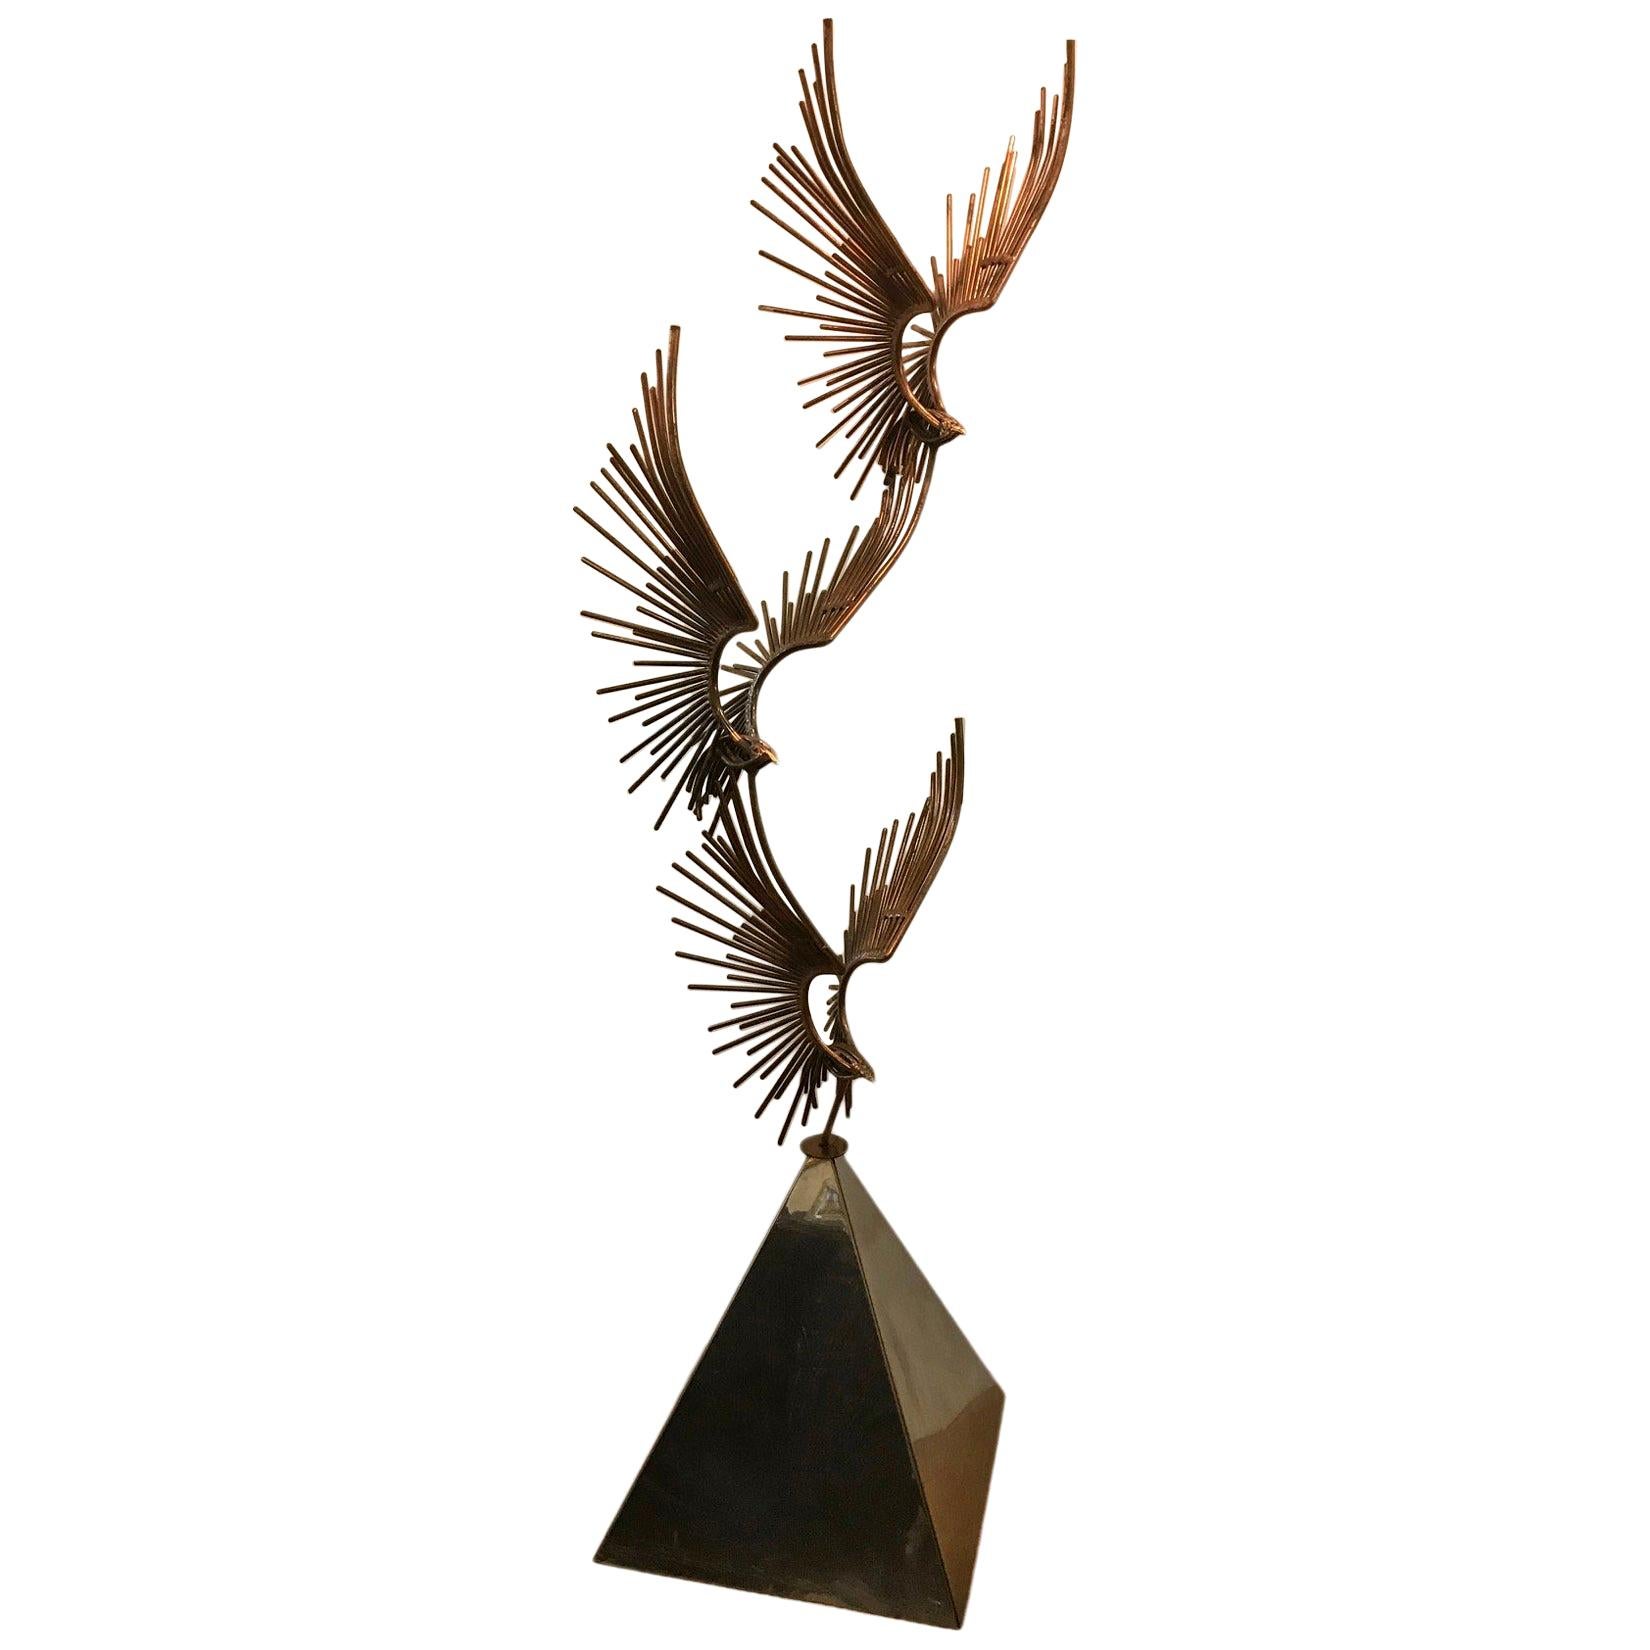 Curtis Jere Sculpture of Eagle in Flight